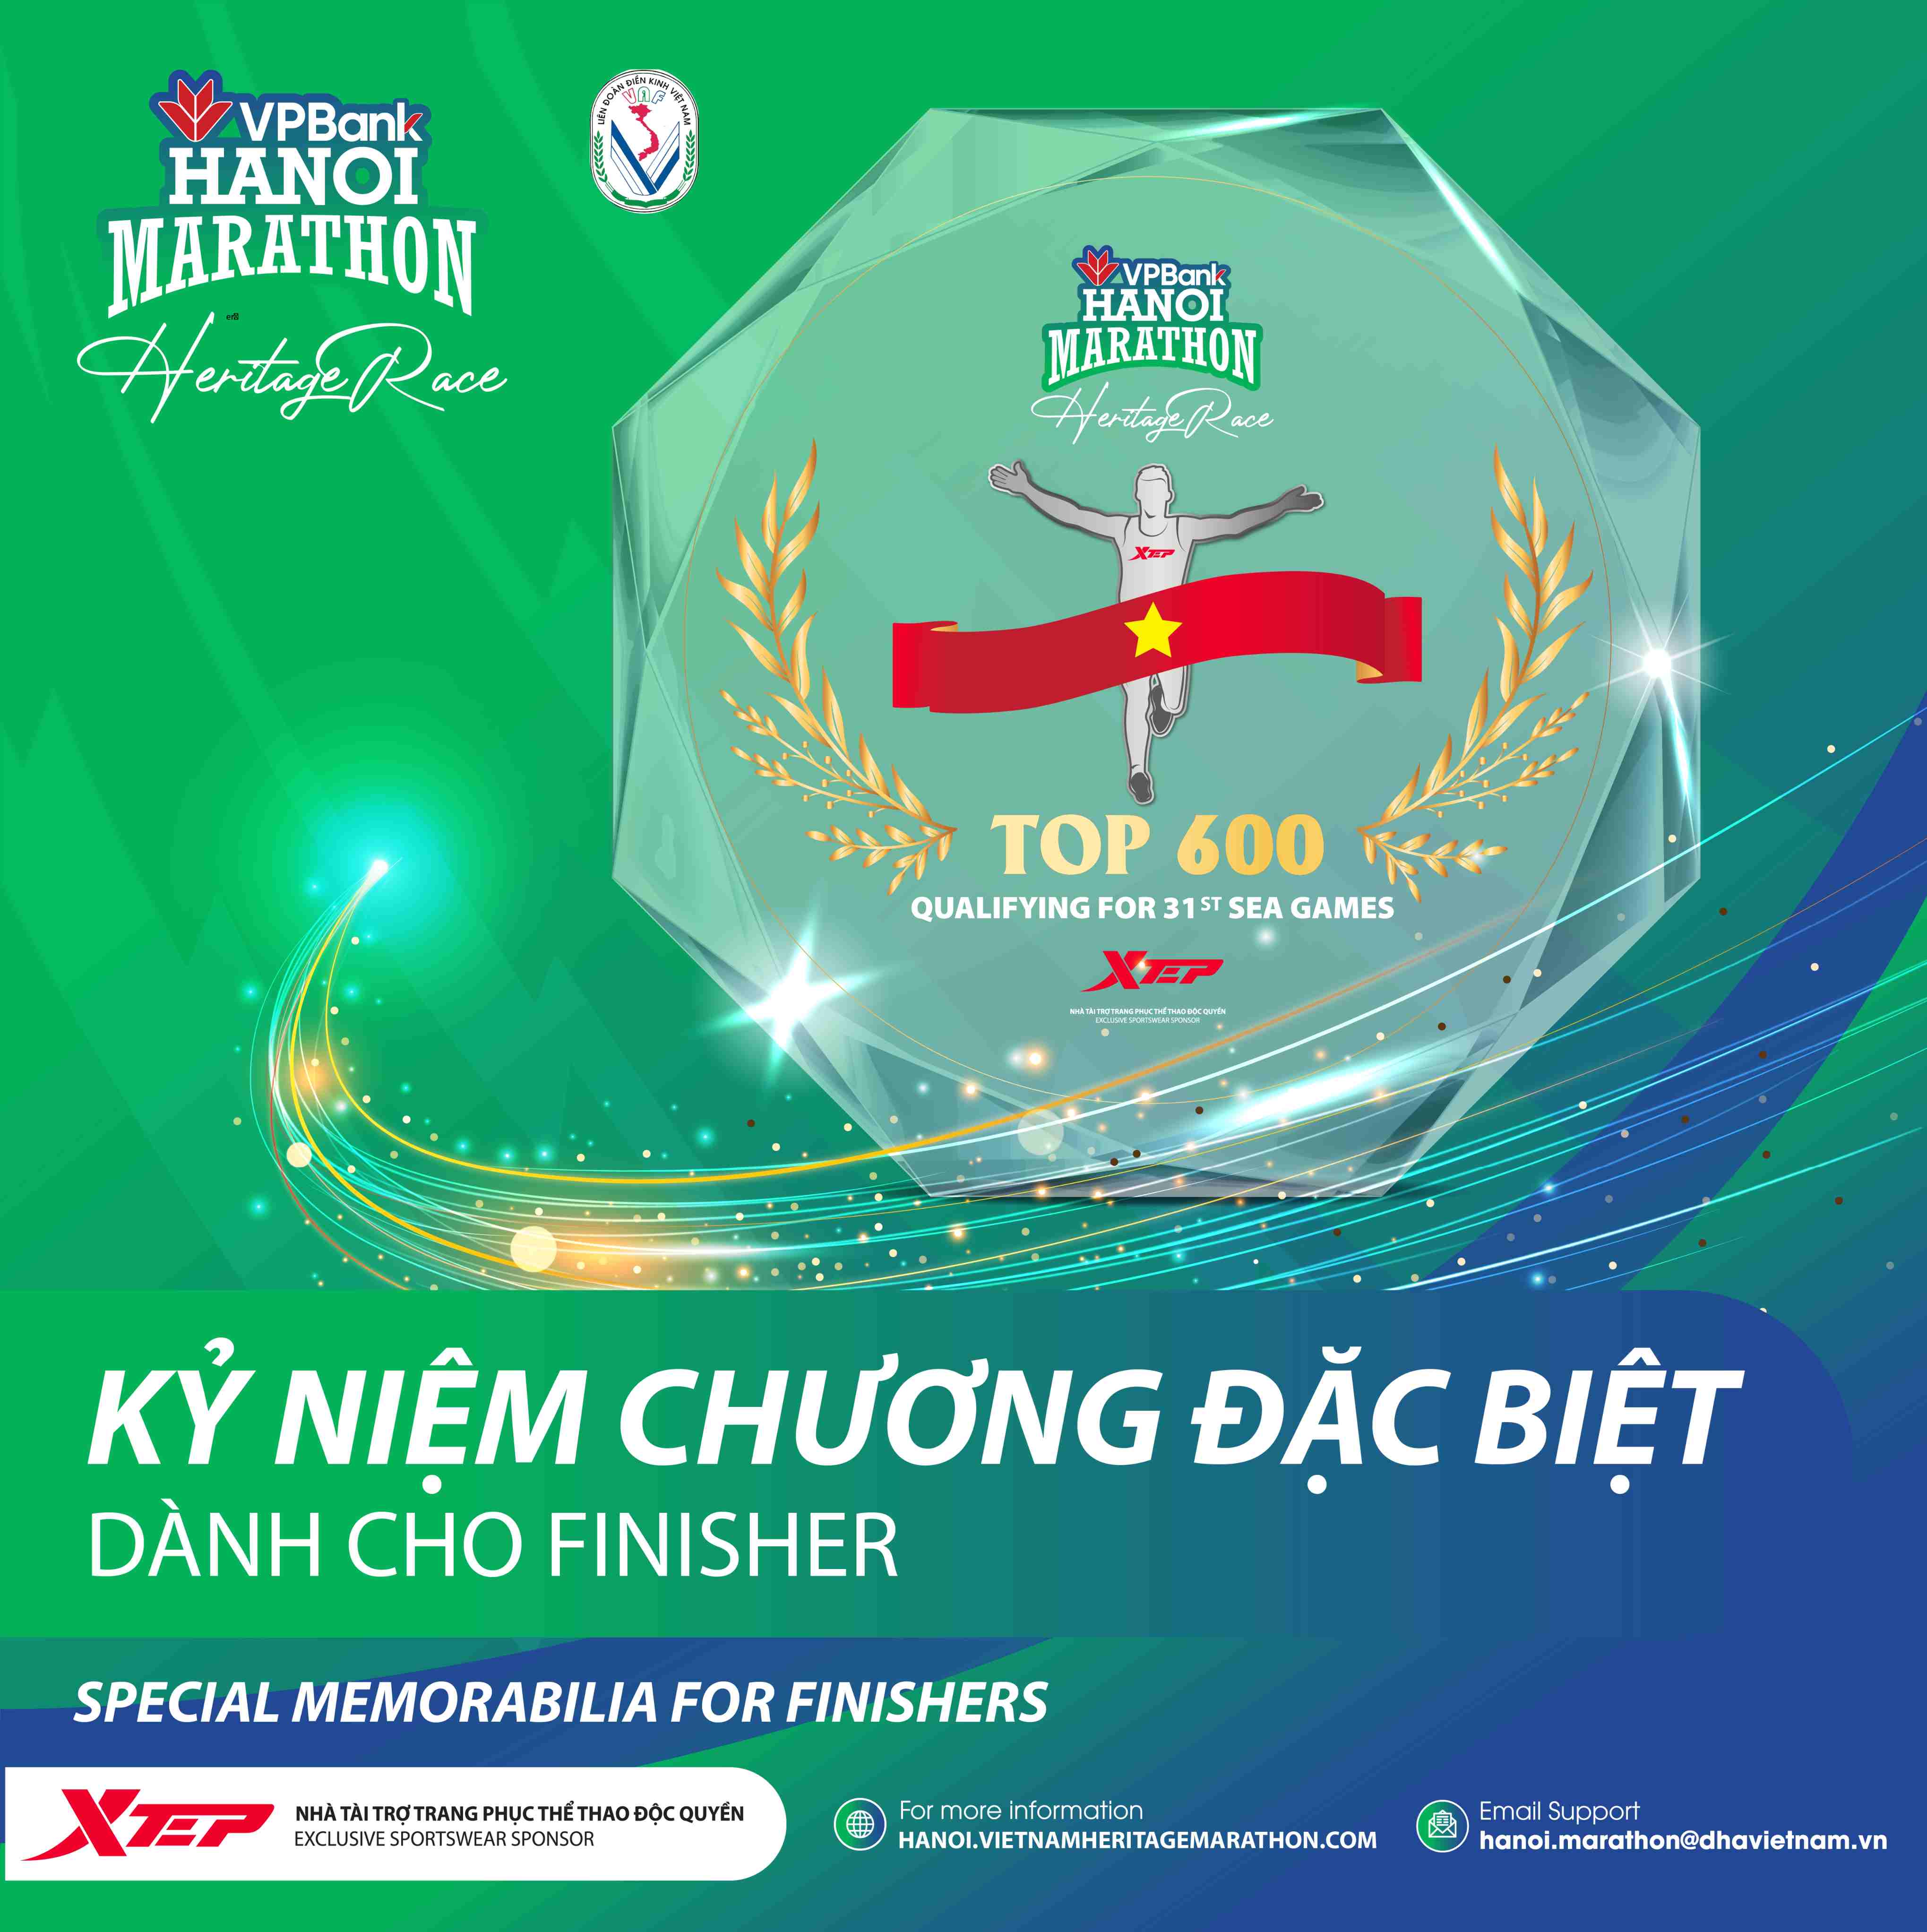 VPBank Hanoi Marathon: Memorabilia For Finishers to Debut March 6